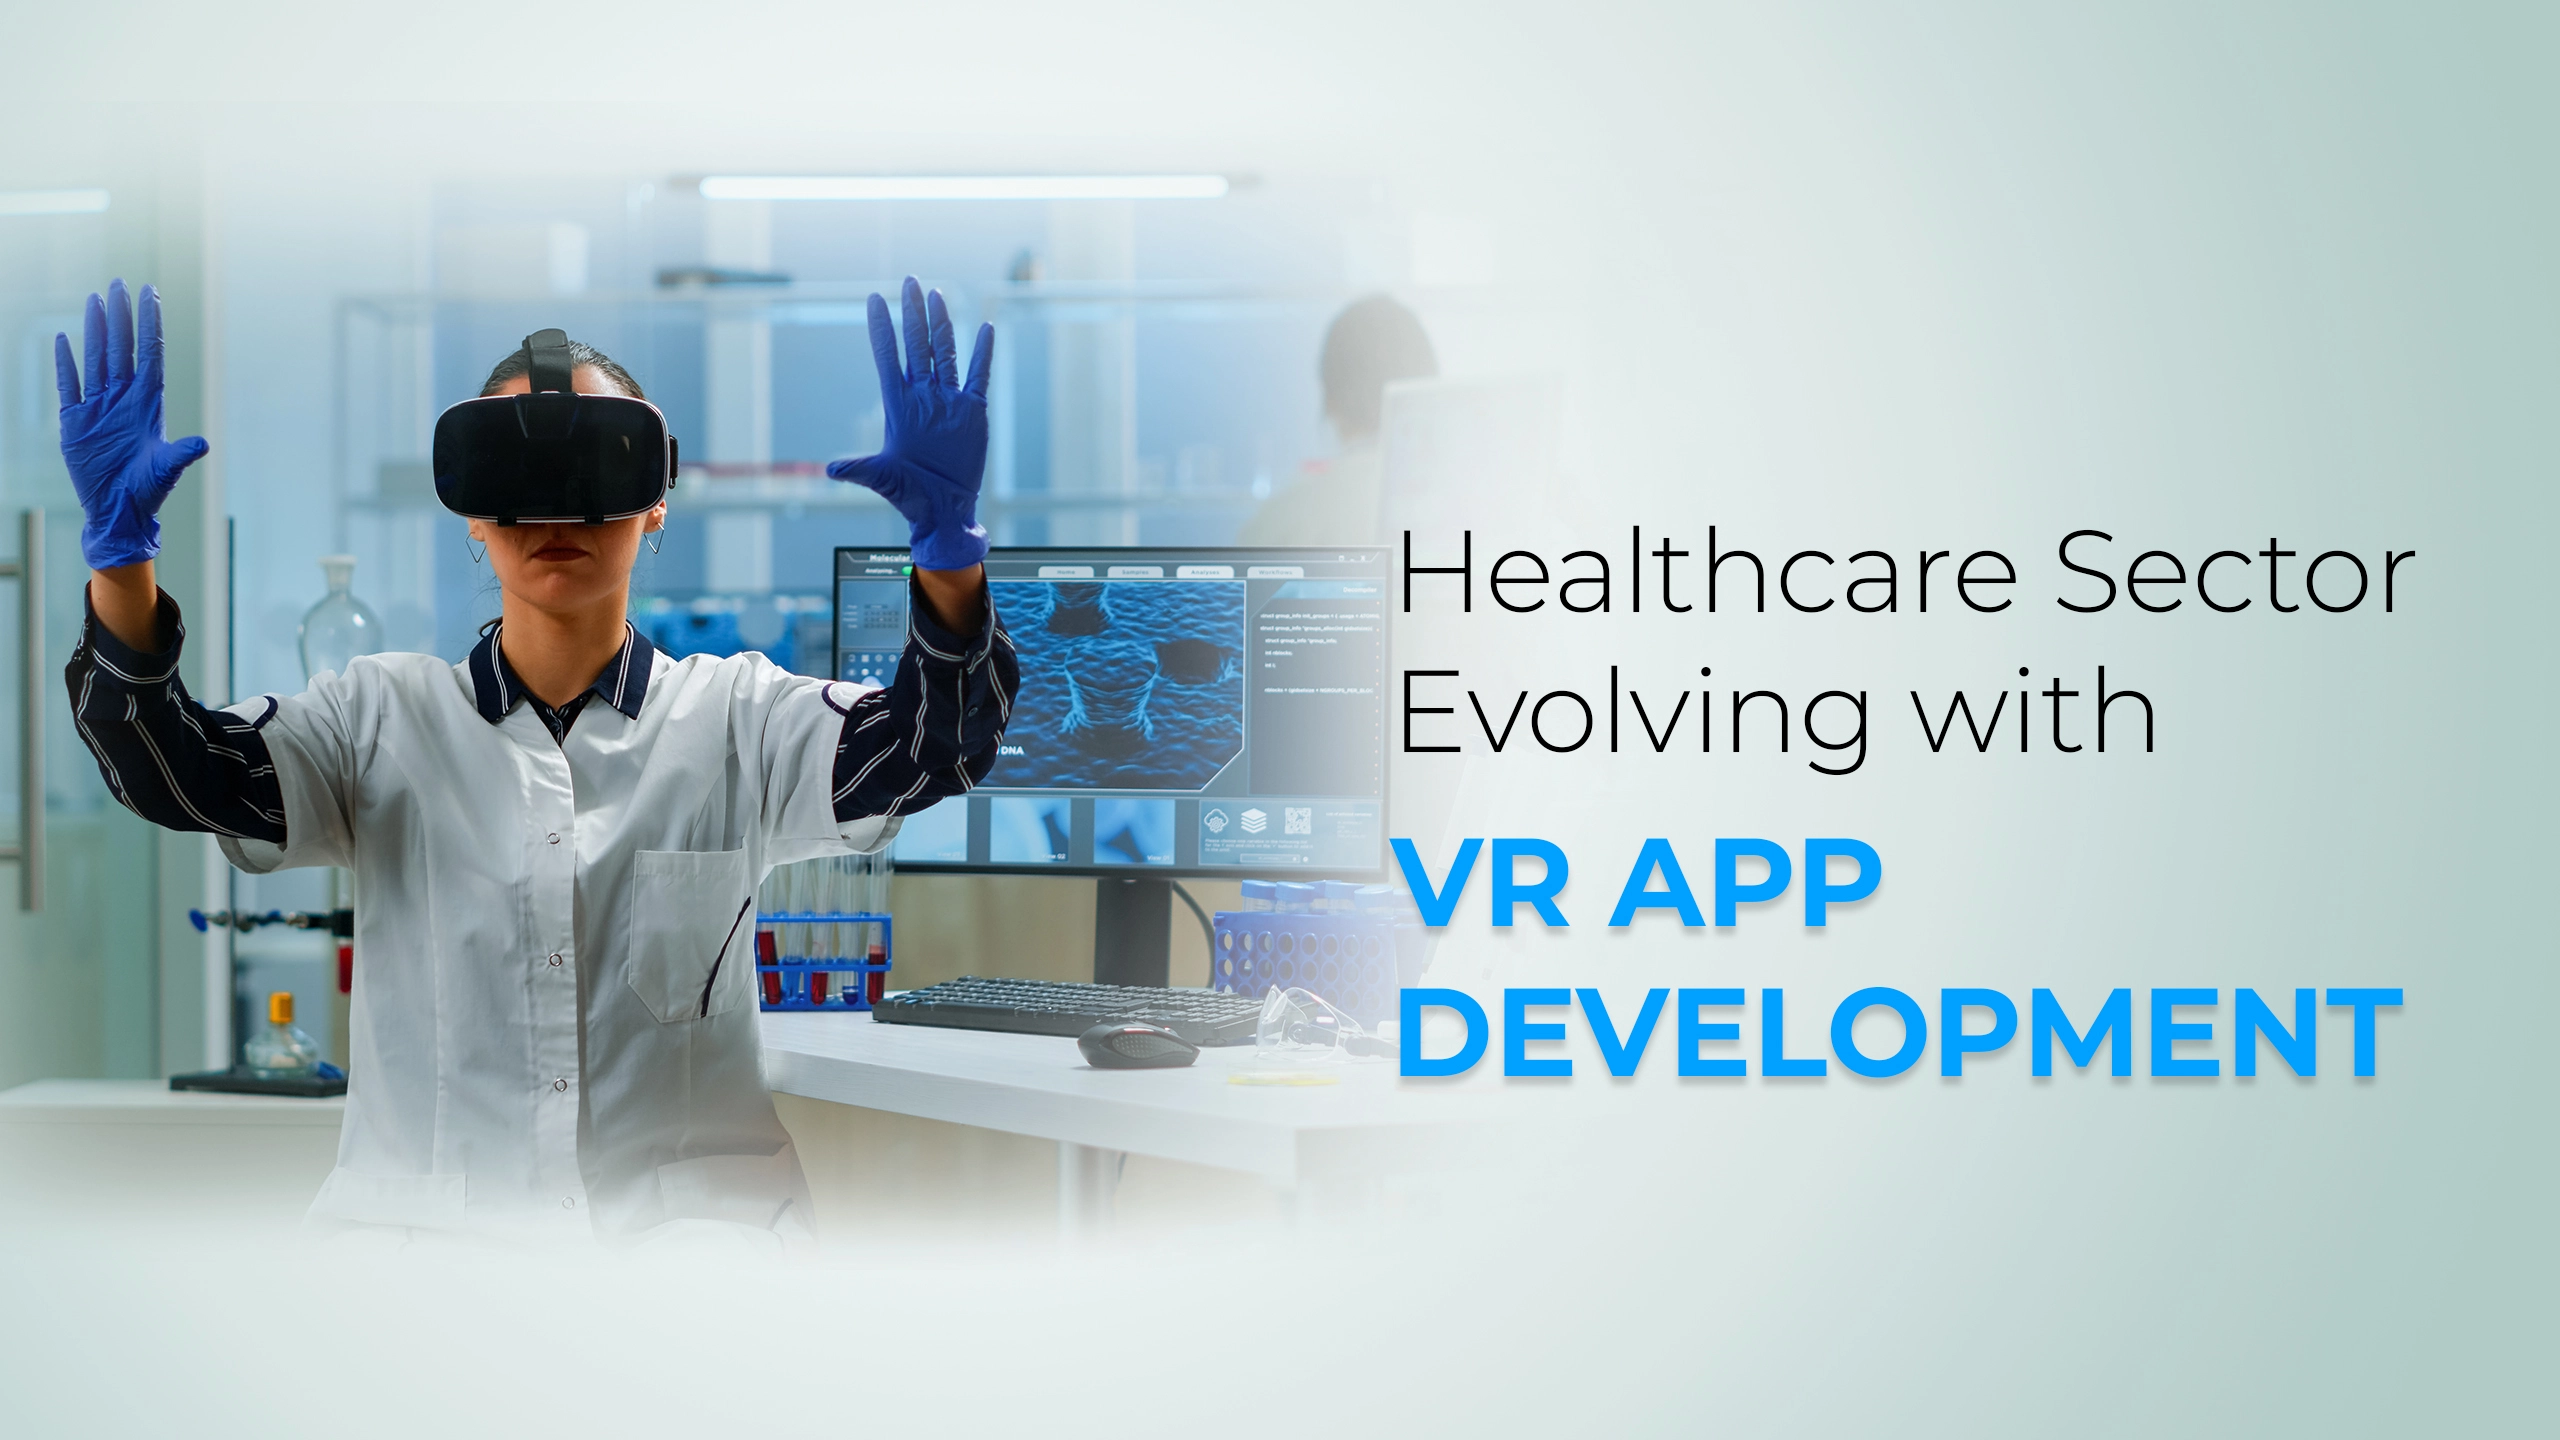 VR App Development